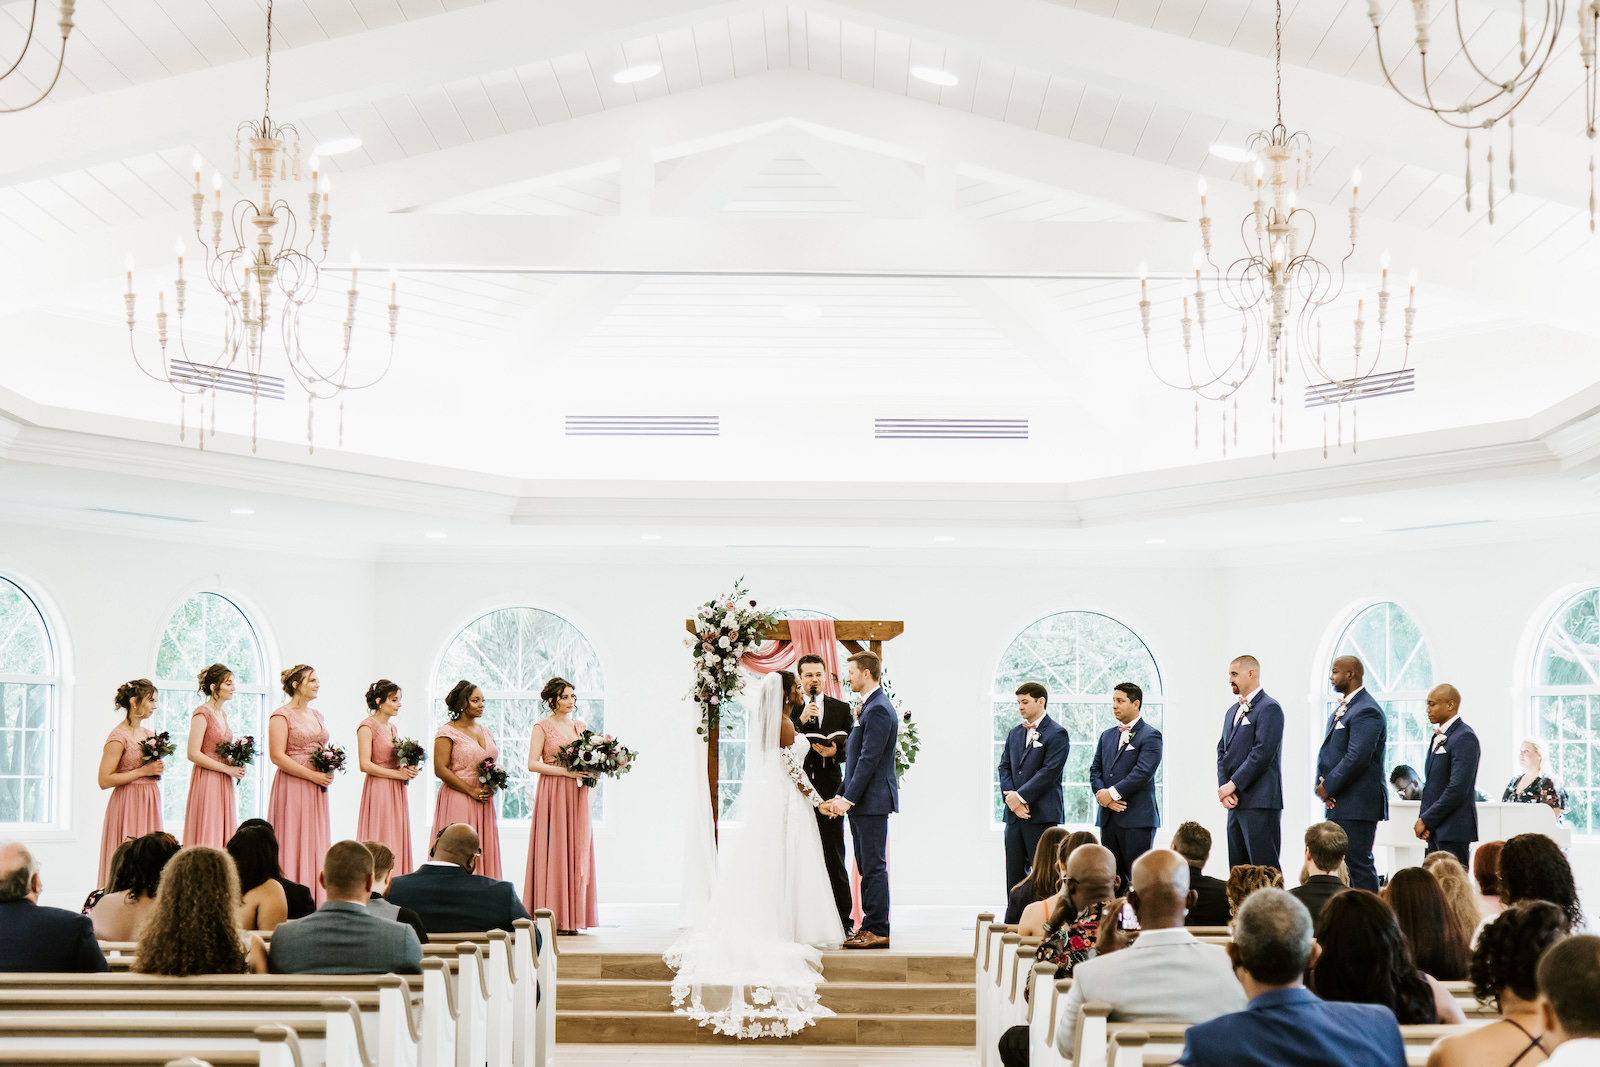 Indoor Church Wedding Ceremony at Safety Harbor Wedding Venue Harborside Chapel | Blush Pink Dusty Rose Mauve Bridesmaid Dresses | Groomsmen Navy Suits